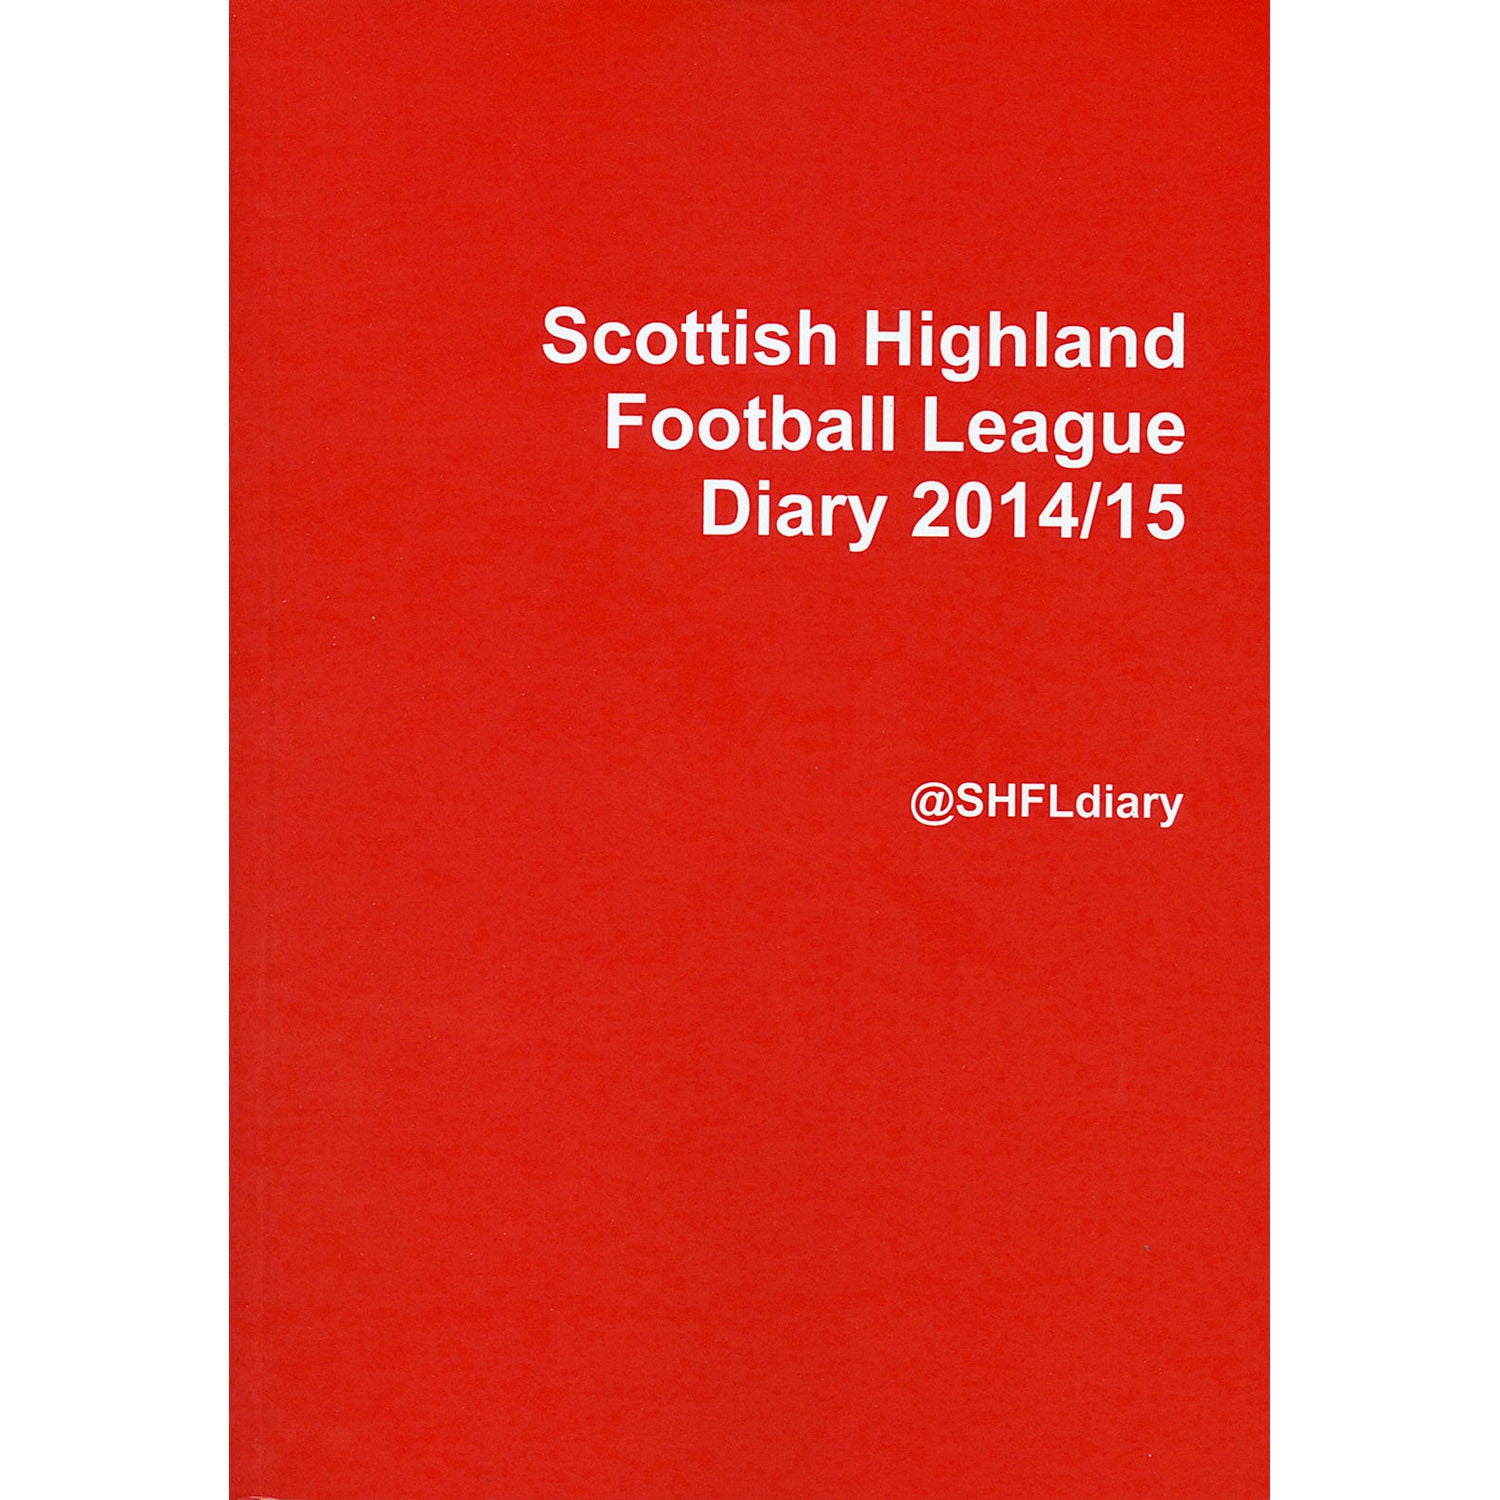 Scottish Highland Football League Diary 2014/15